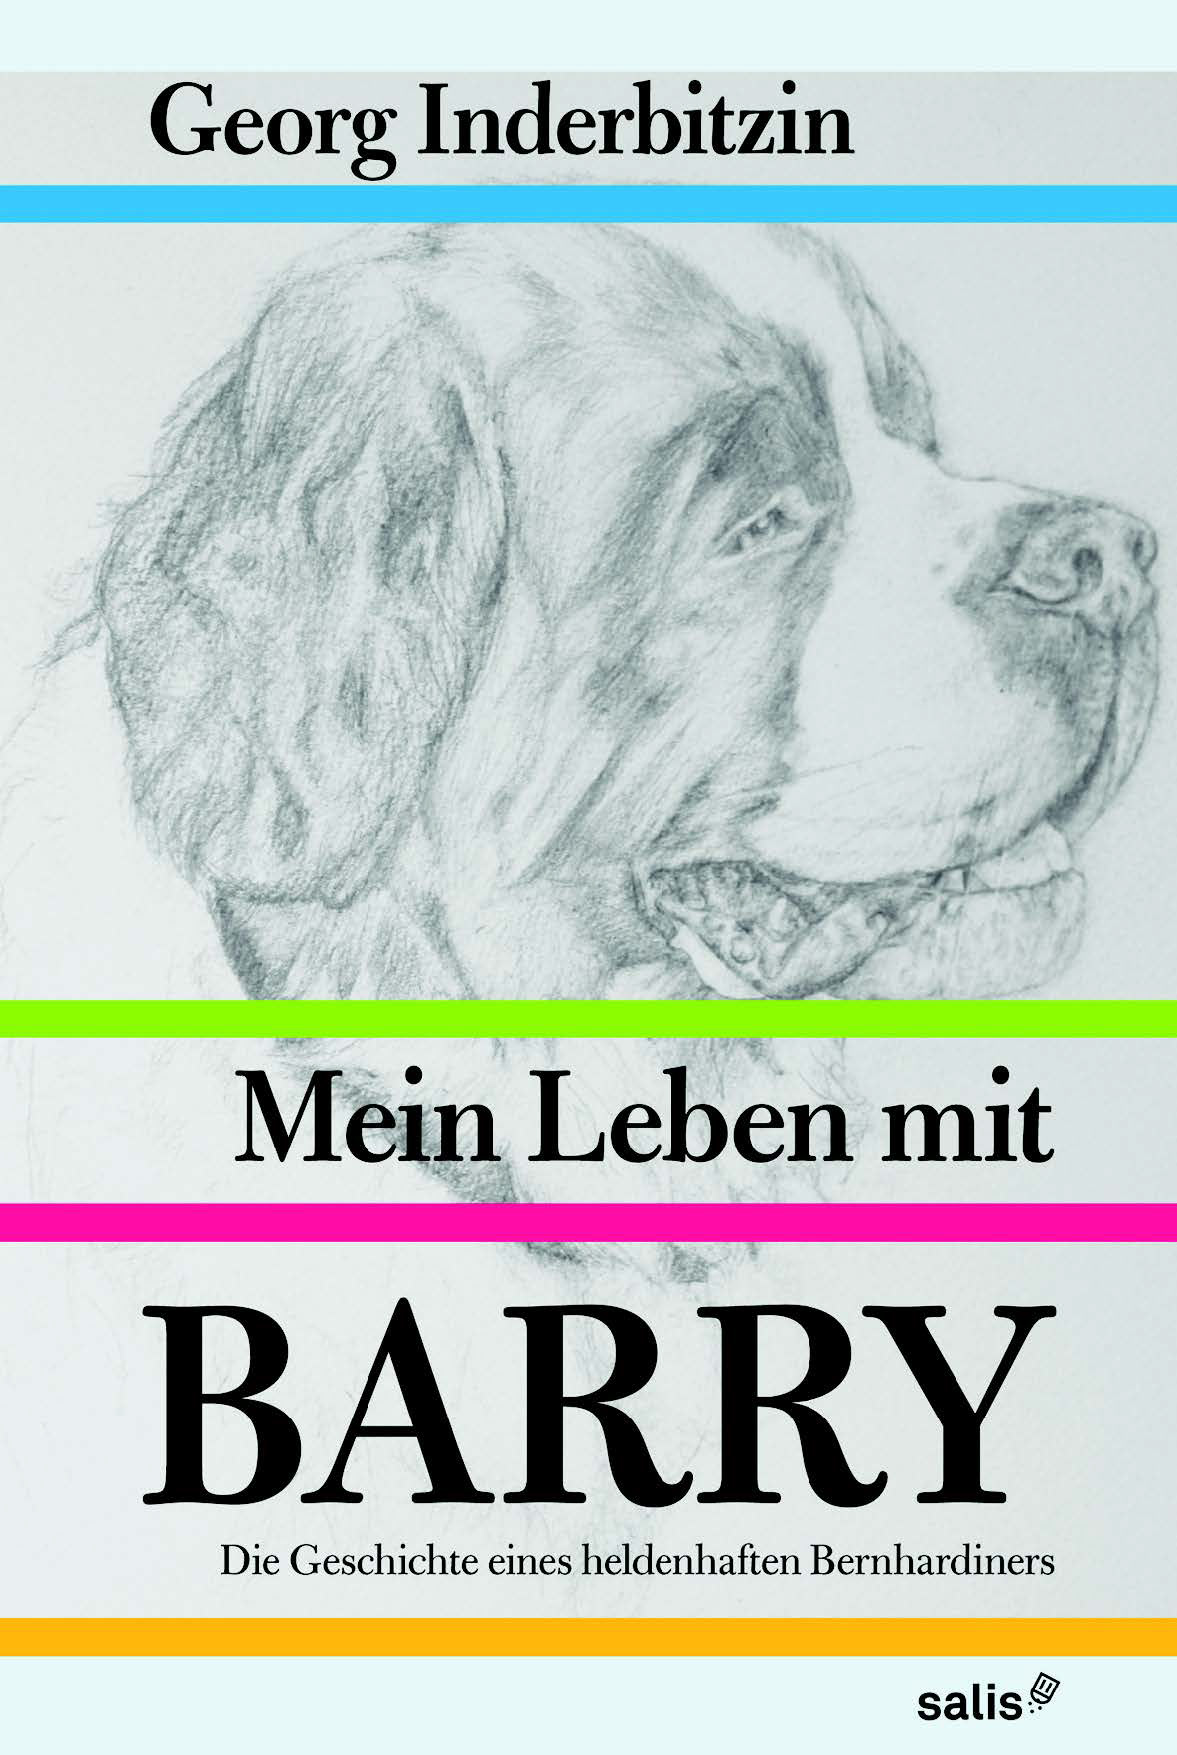 meinlebenmitbarry georg inderbitzin book book cover st bernard dog animal non human animal salisverlag book illustration